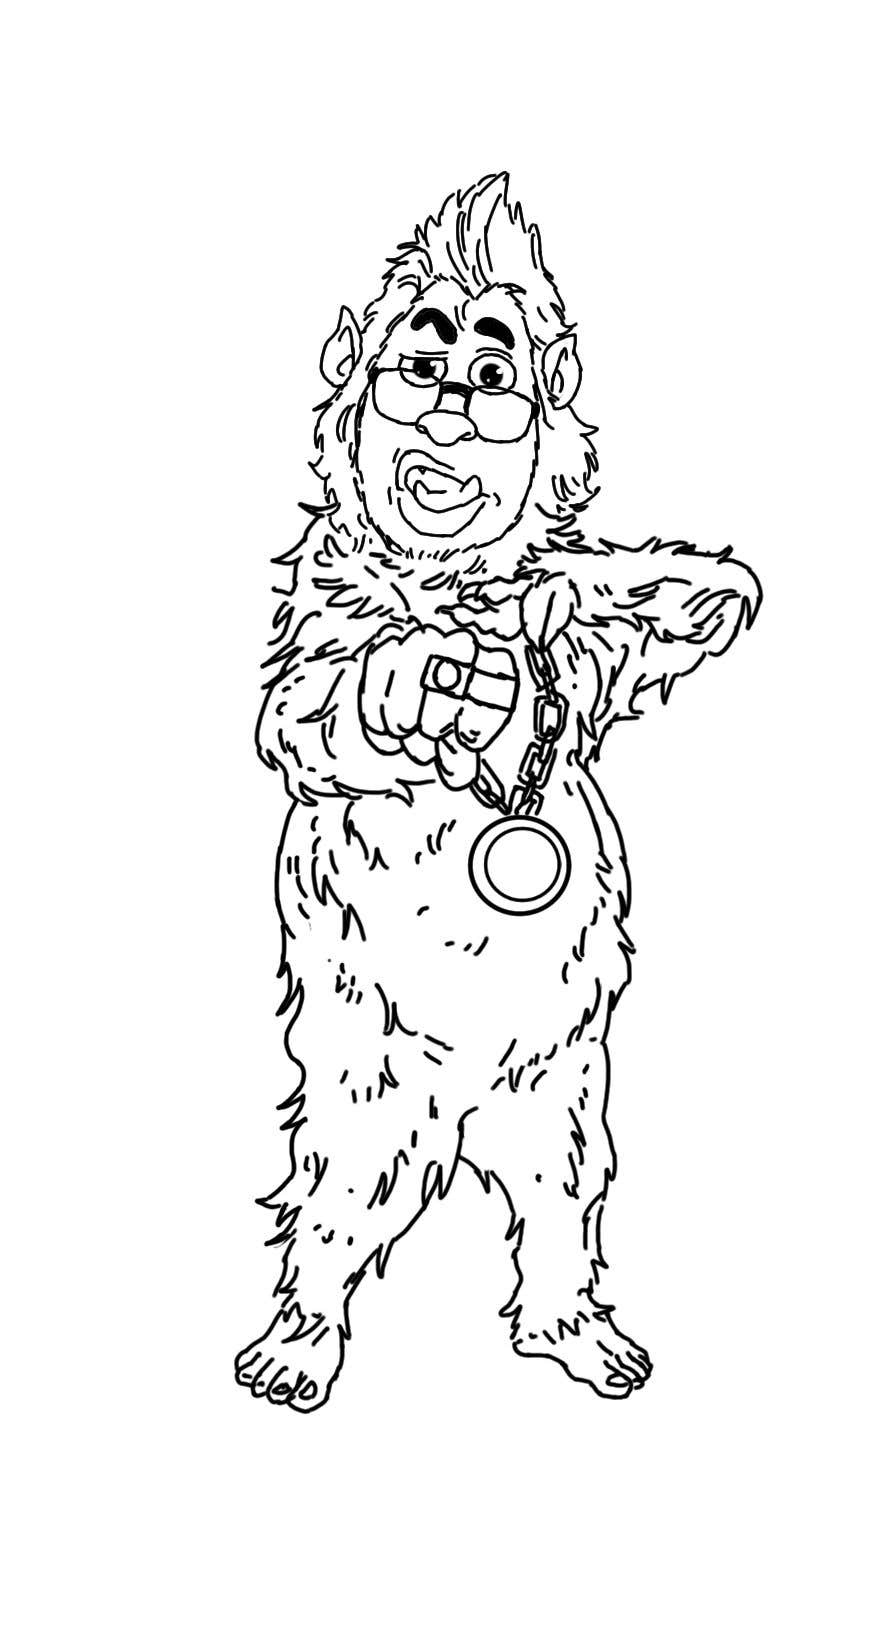 Kandidatura #24për                                                 I need a cartoon Yeti mascot
                                            